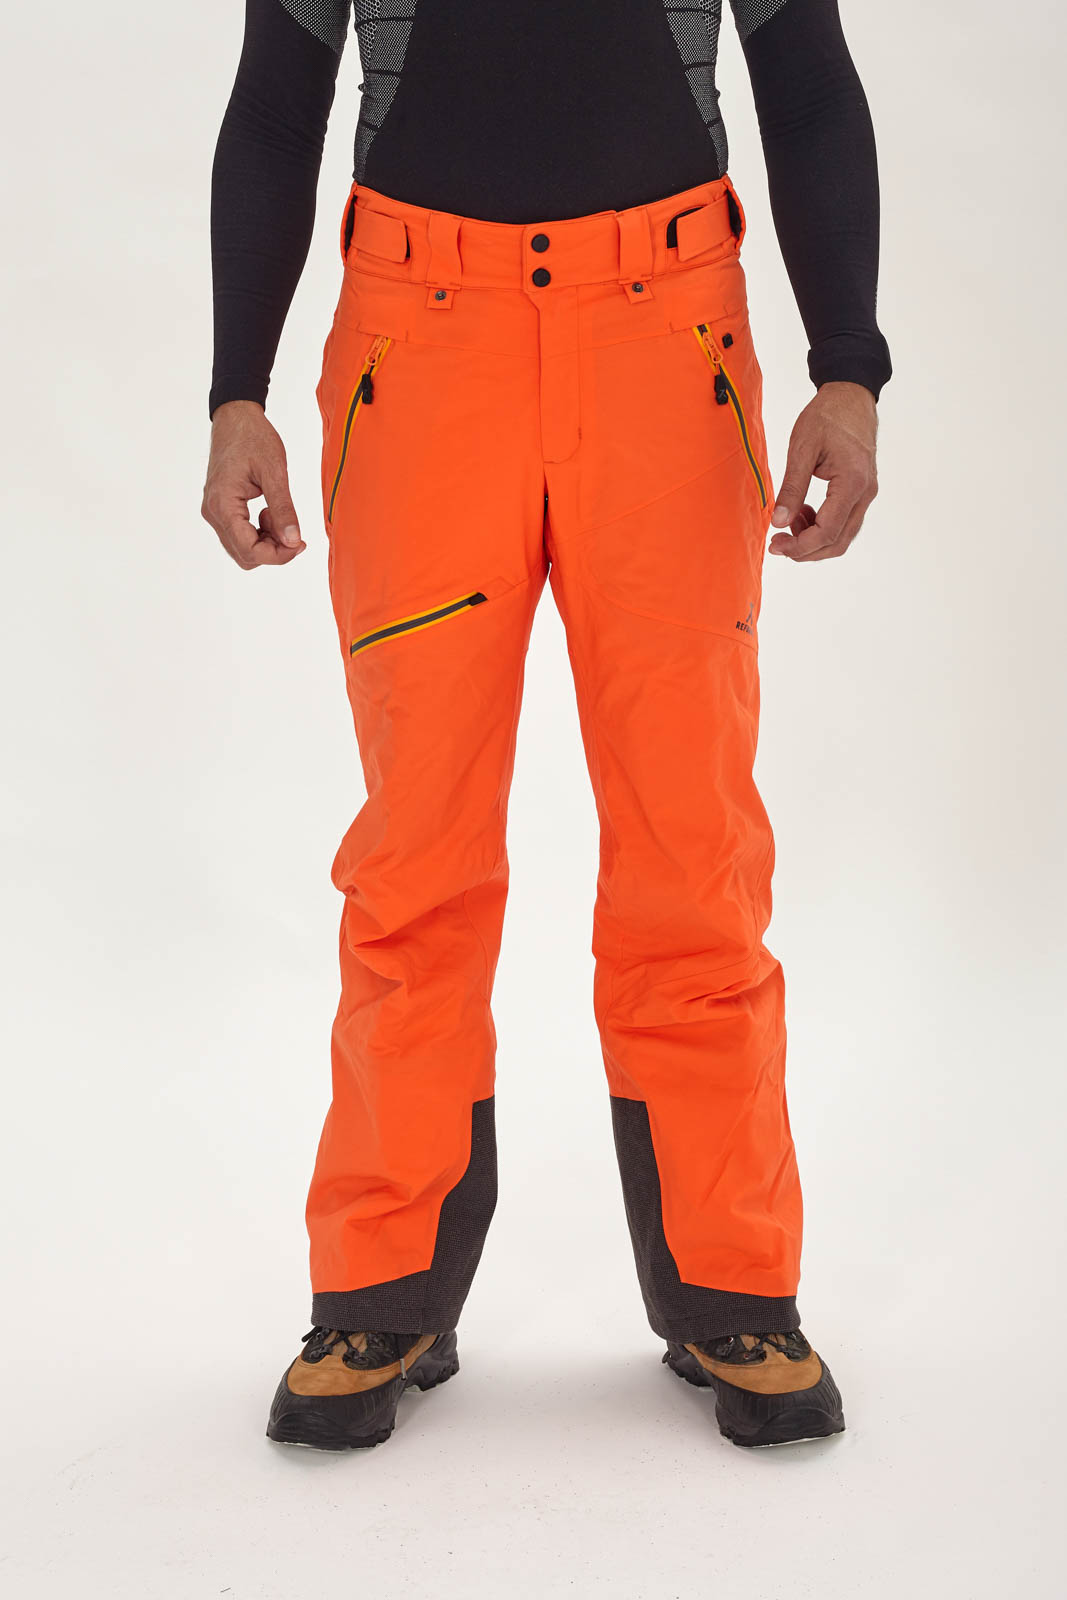 On fire men's ski pant - Reforcer, ropa de esquí de alta calidad, hecha en  Europa